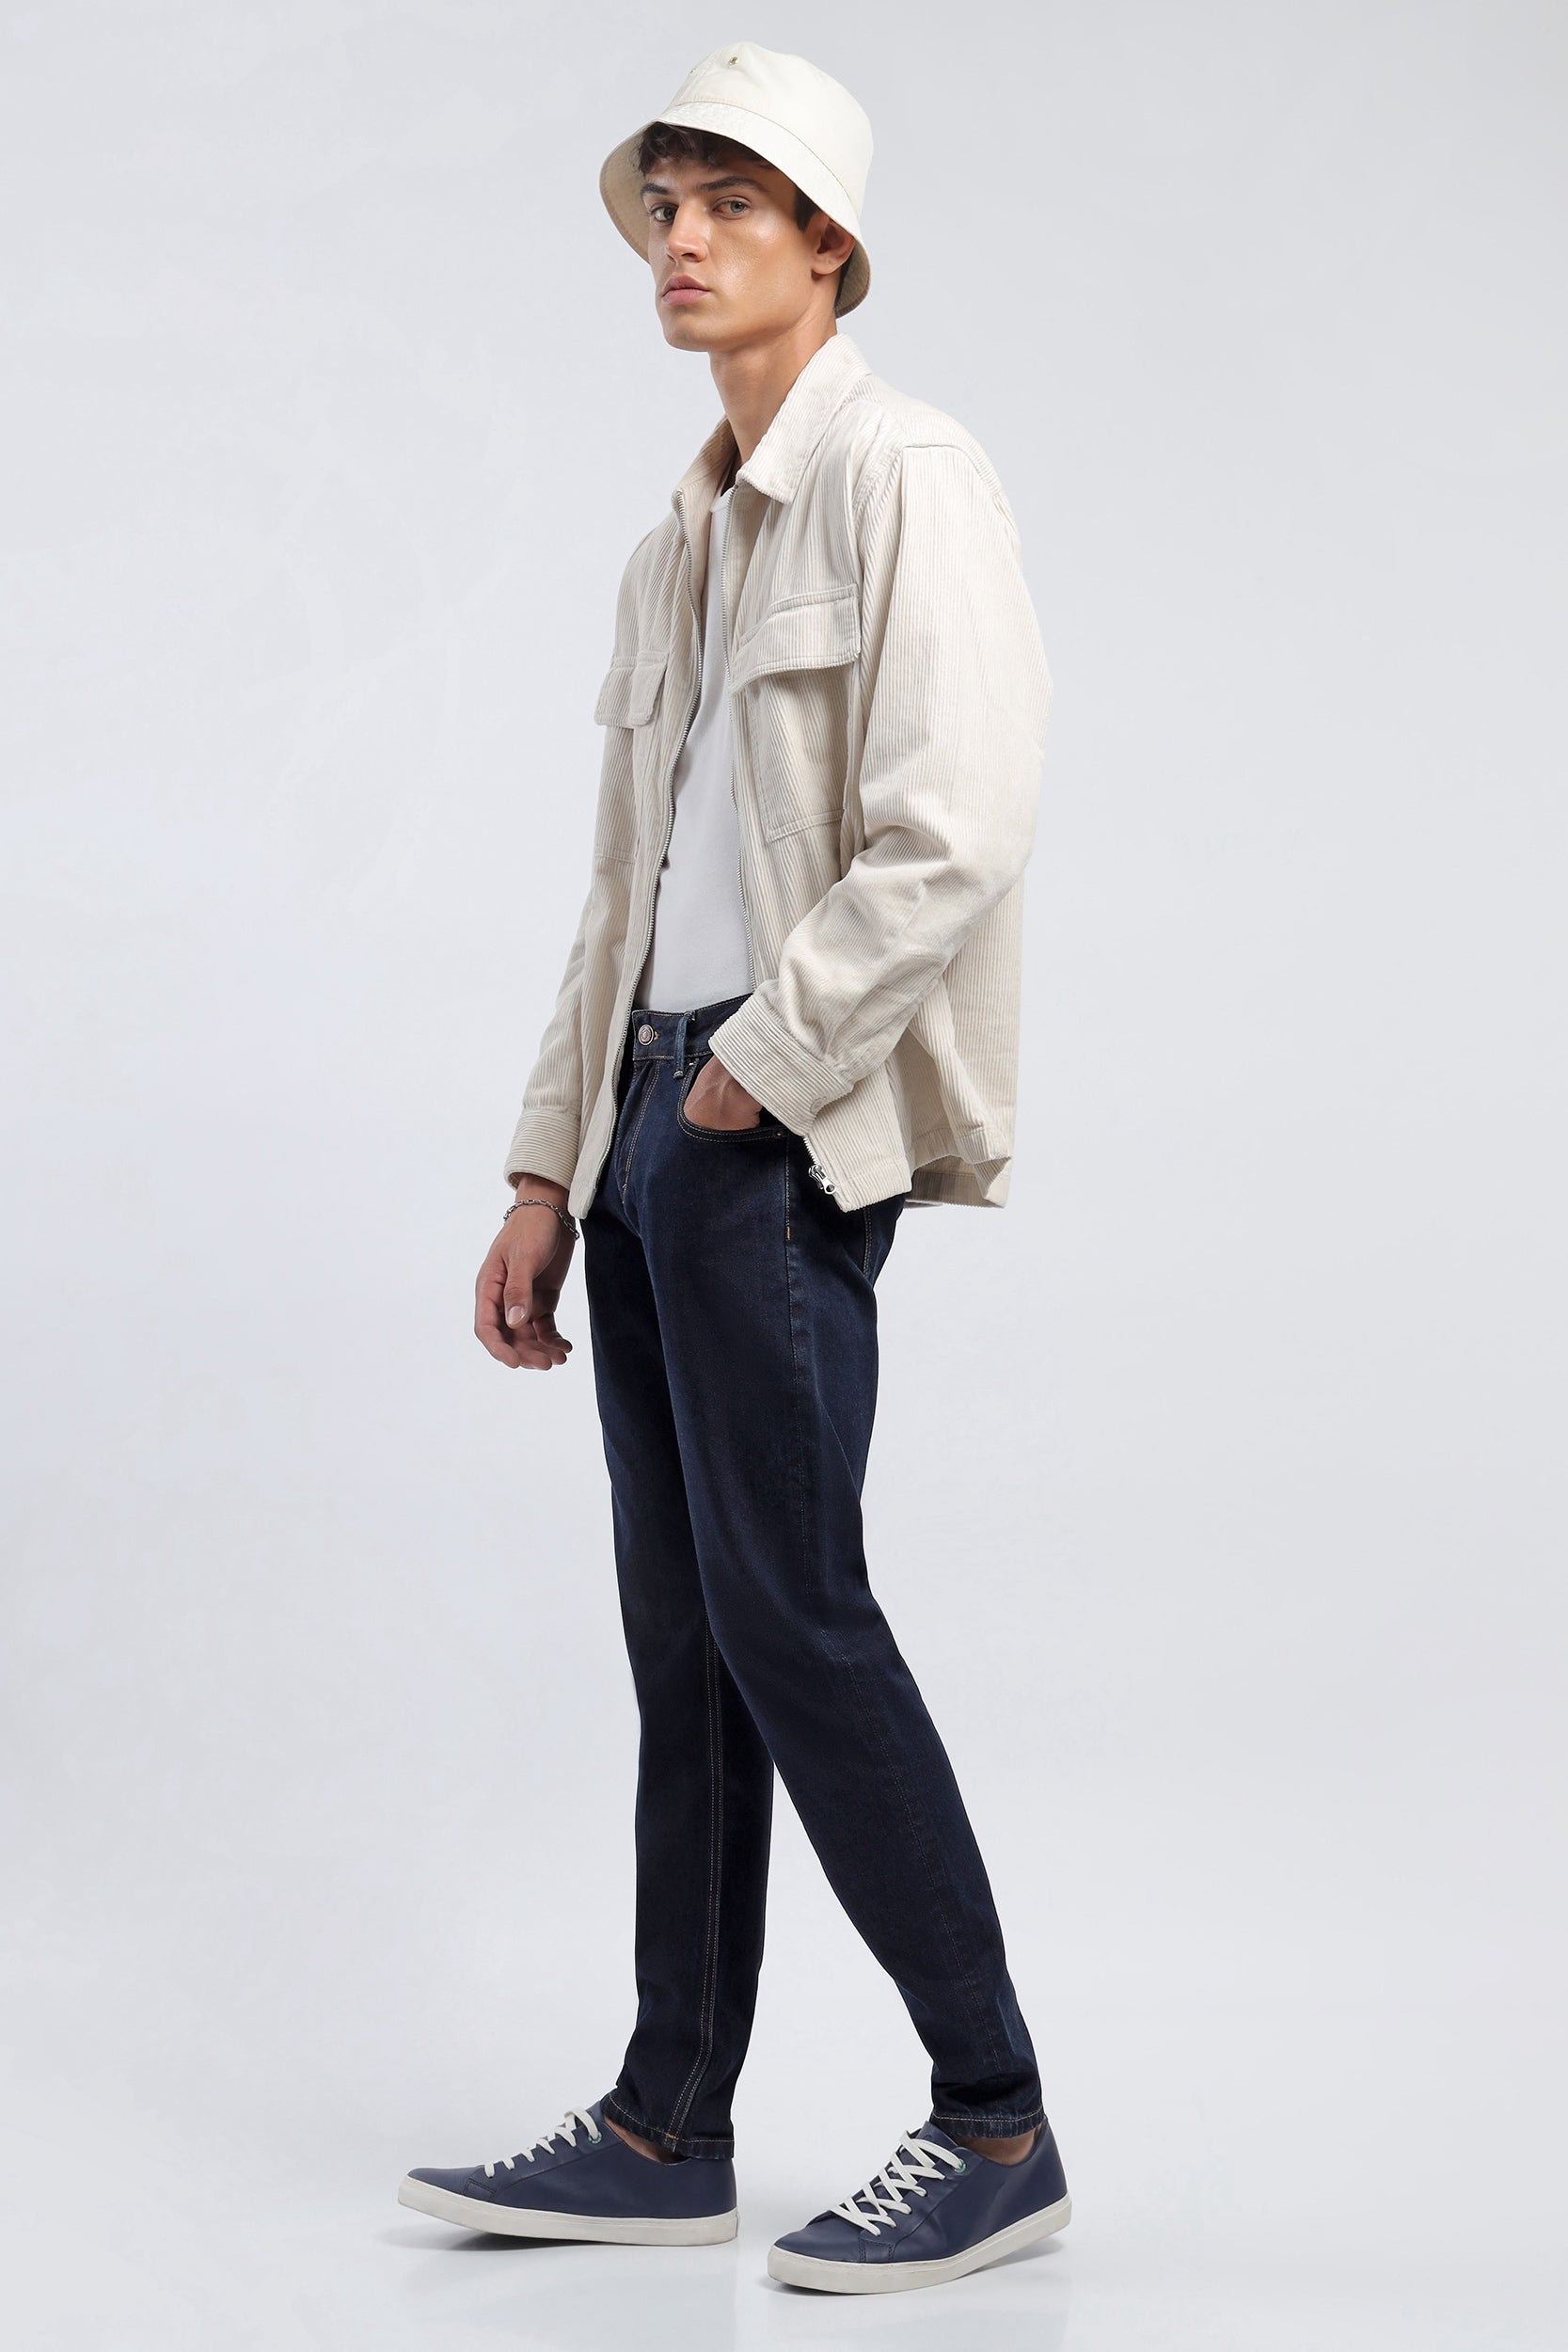 14-oz. White Oak Selvedge American-Made Jeans Slim Fit - GRAND ST